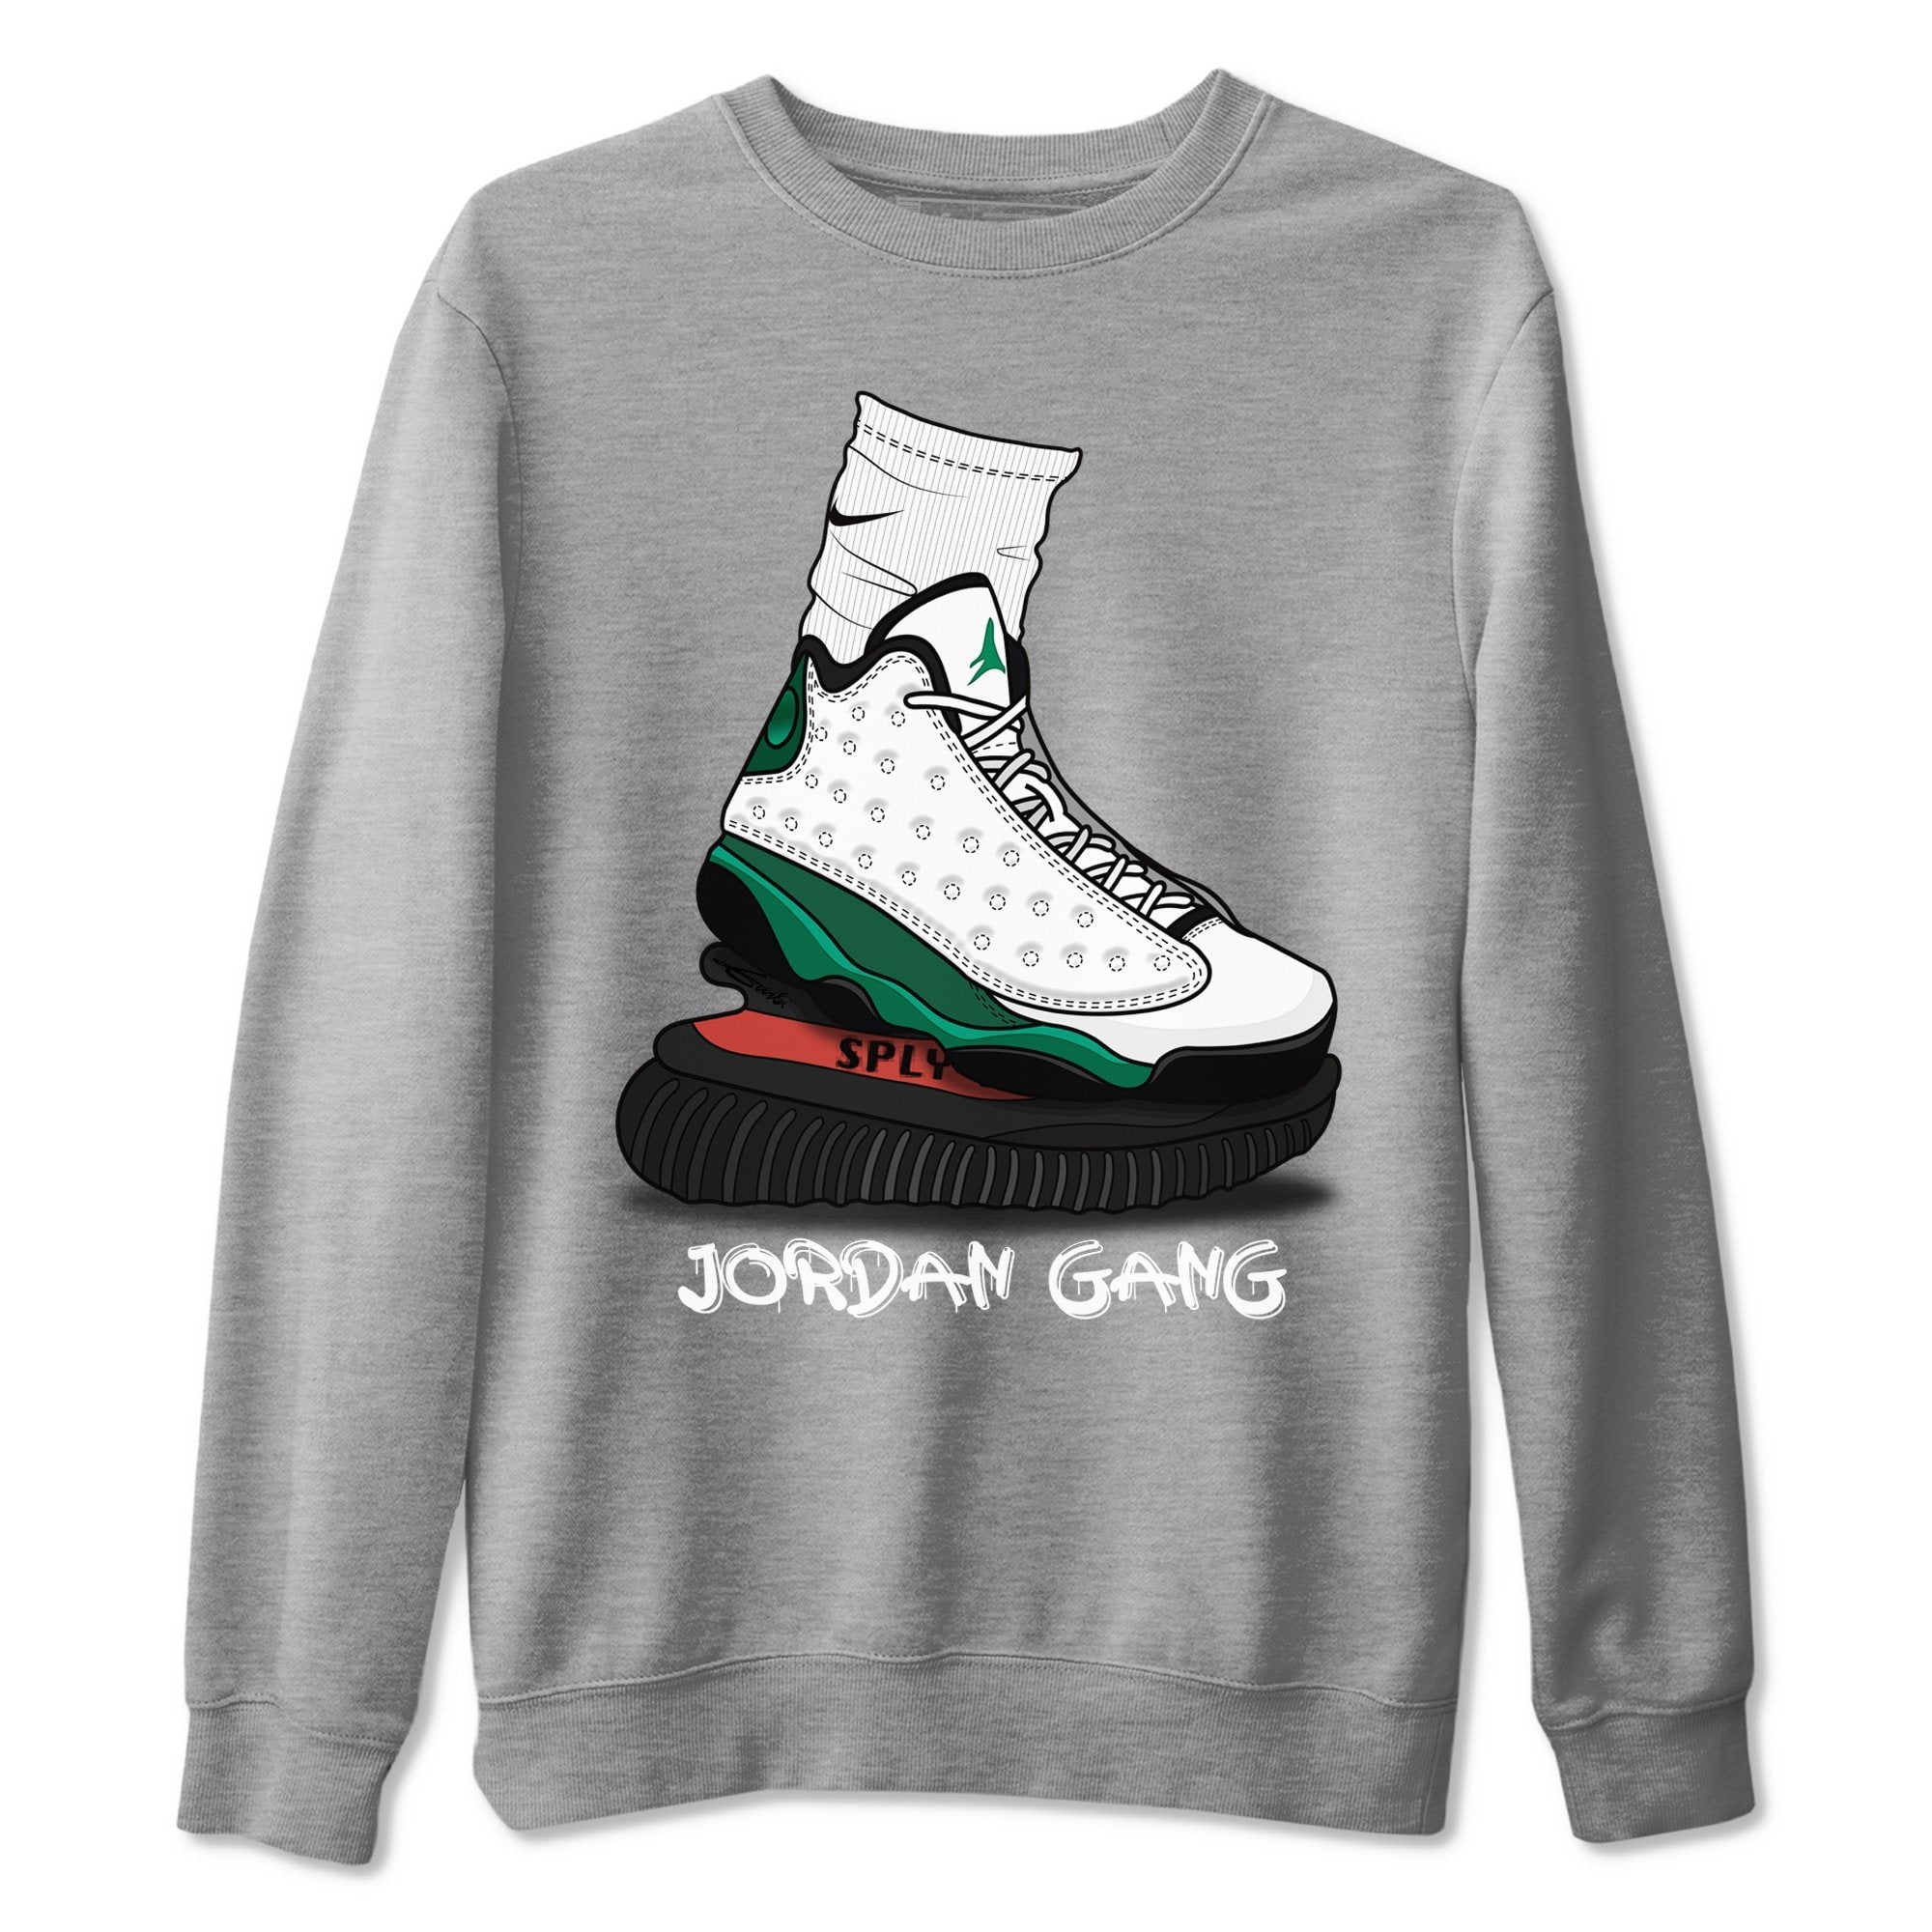 Jordan Gang Sweatshirt Jordan 13 White 